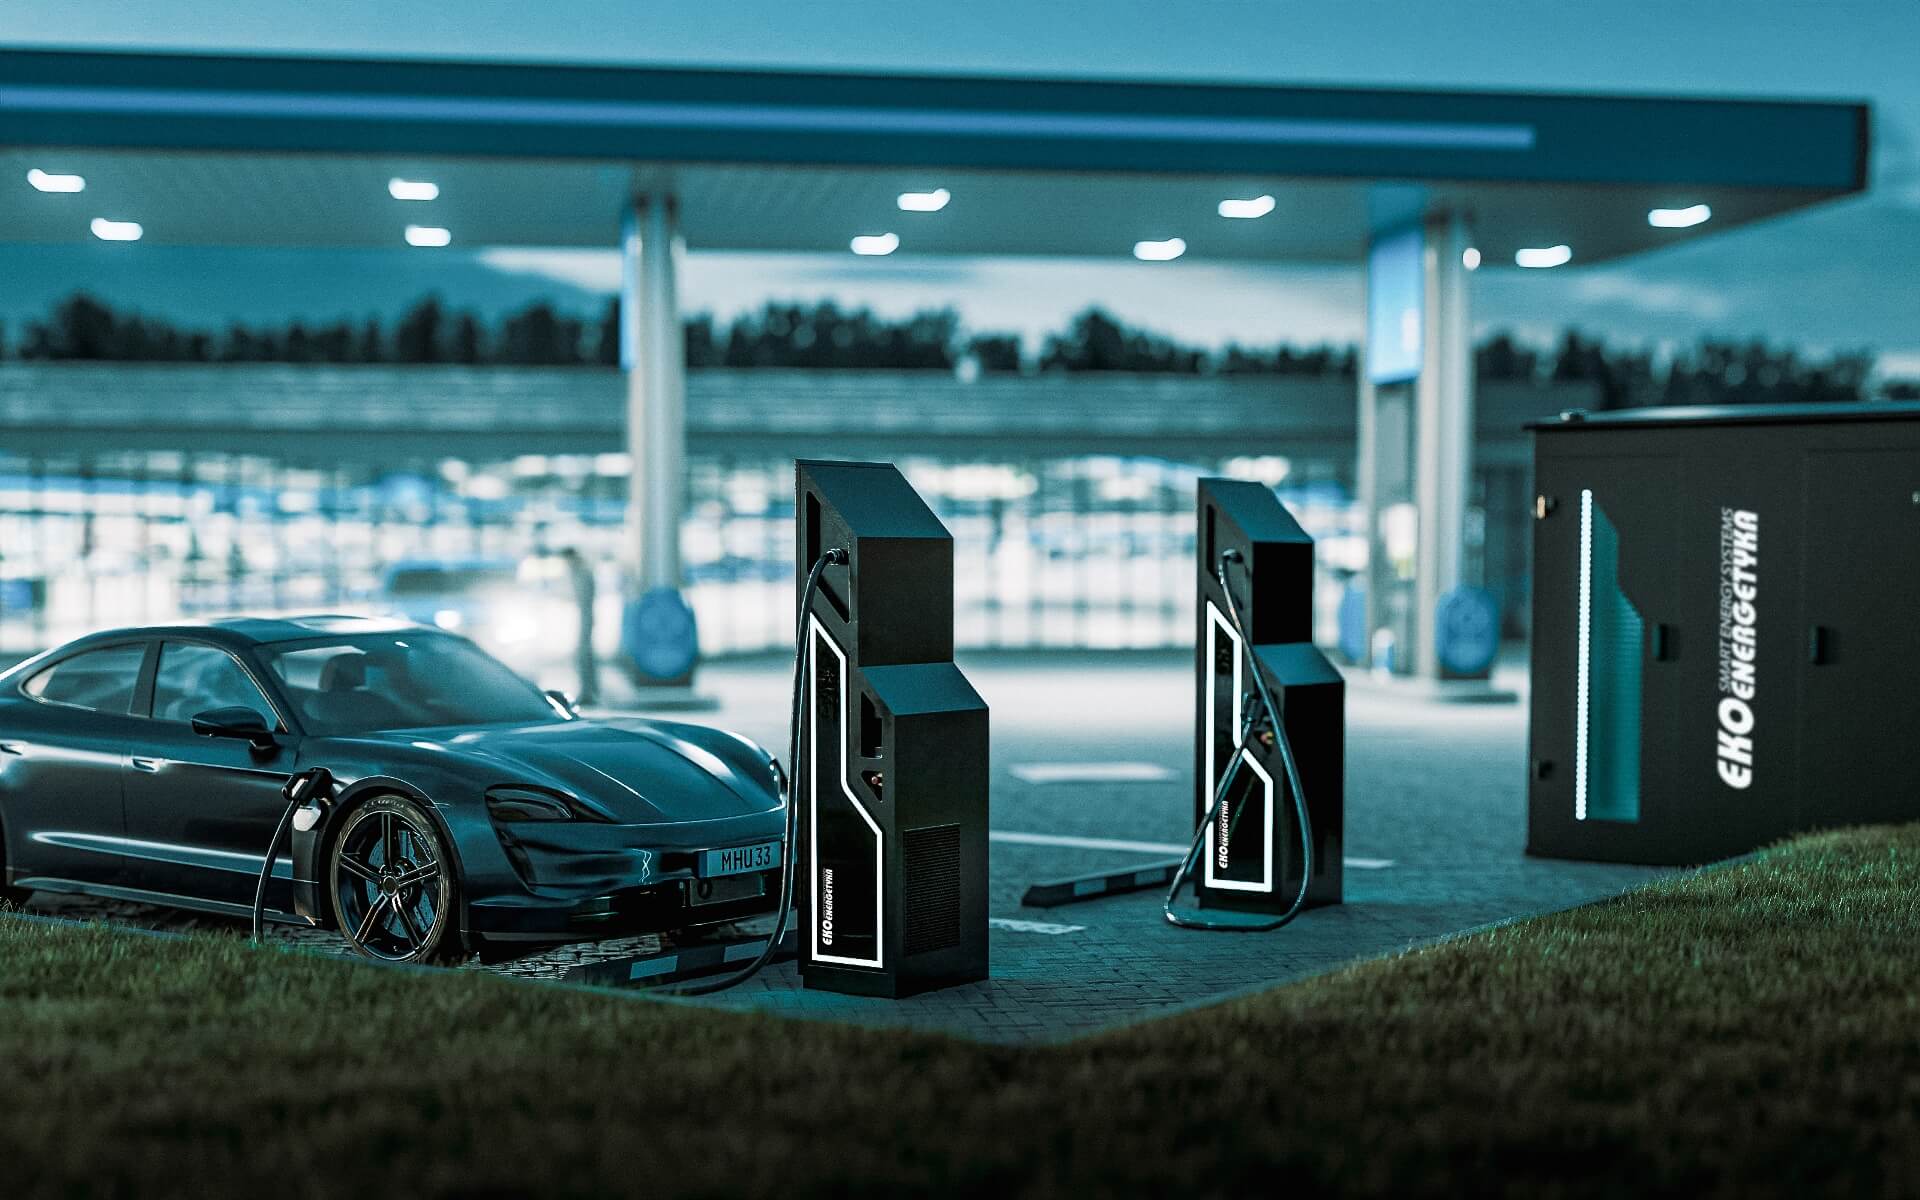 , Ekoenergetyka charging stations for EVs now part of the swisscharge.ch offer, Ekoenergetyka